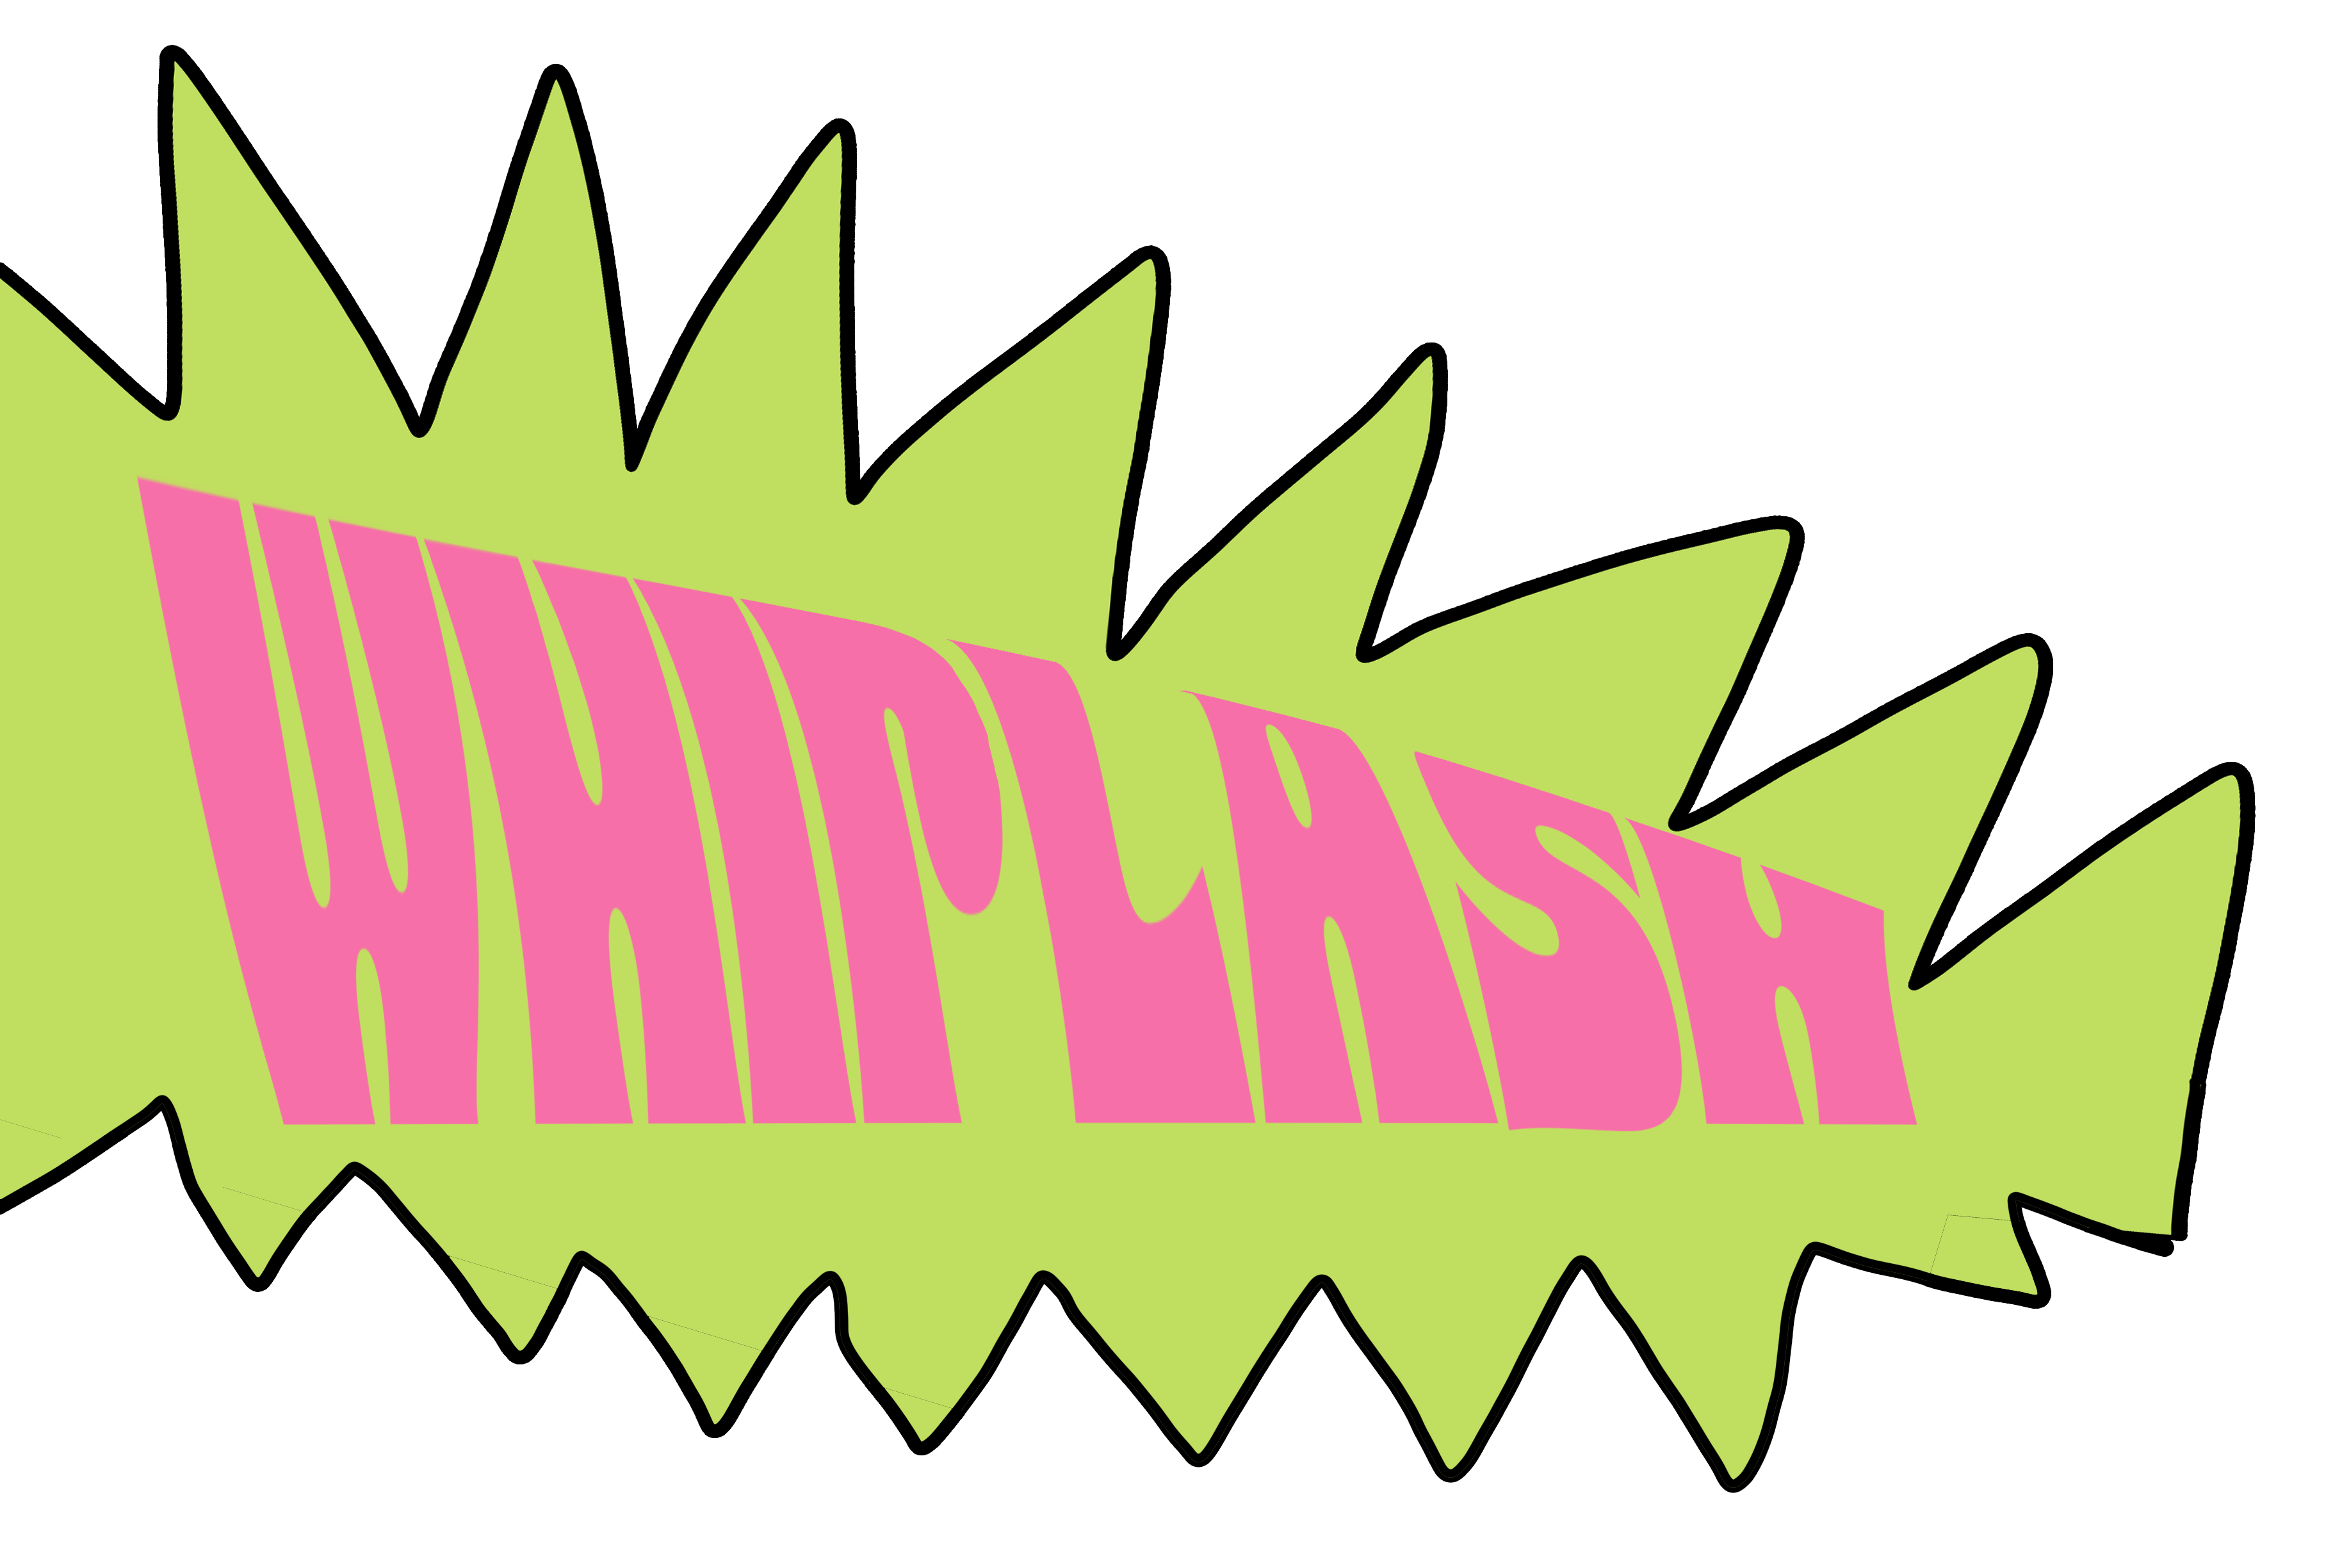 text reads "whiplash" on a cartoon "pow" symbol